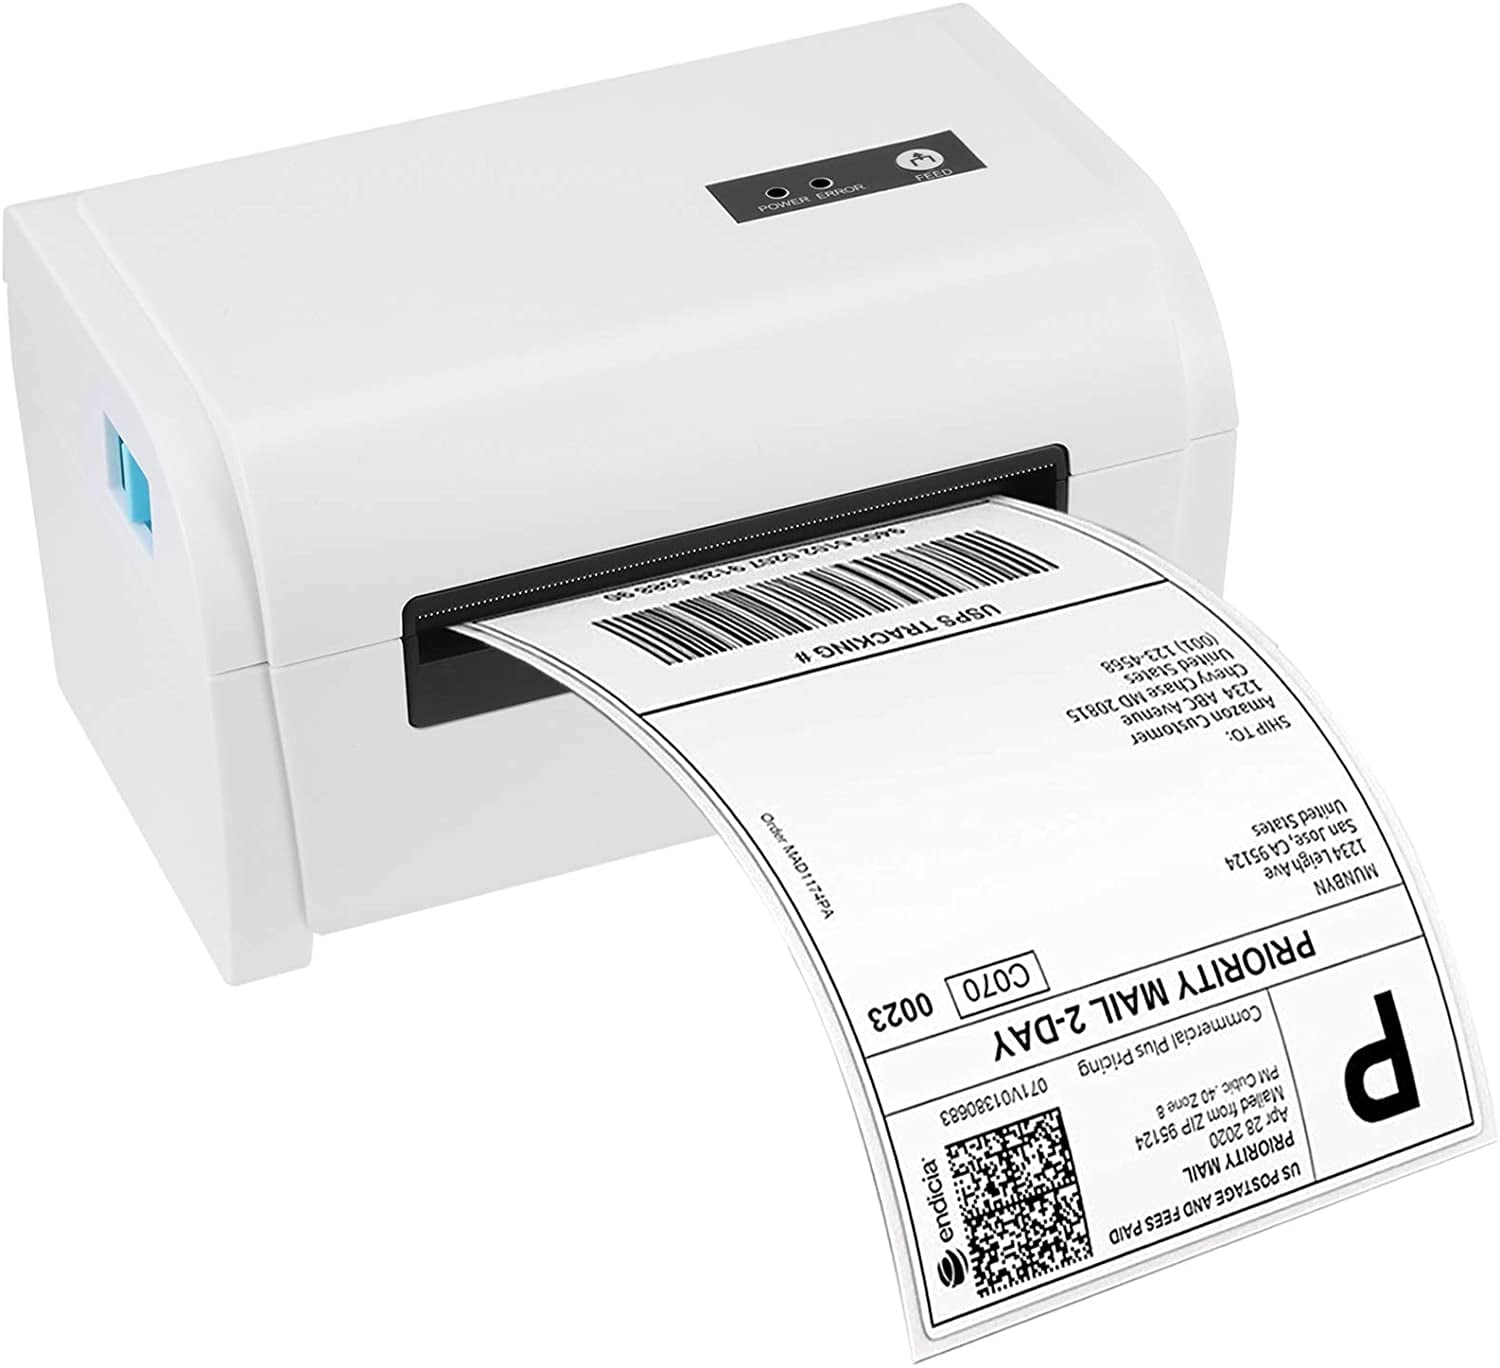 leoity thermal label printer driver download